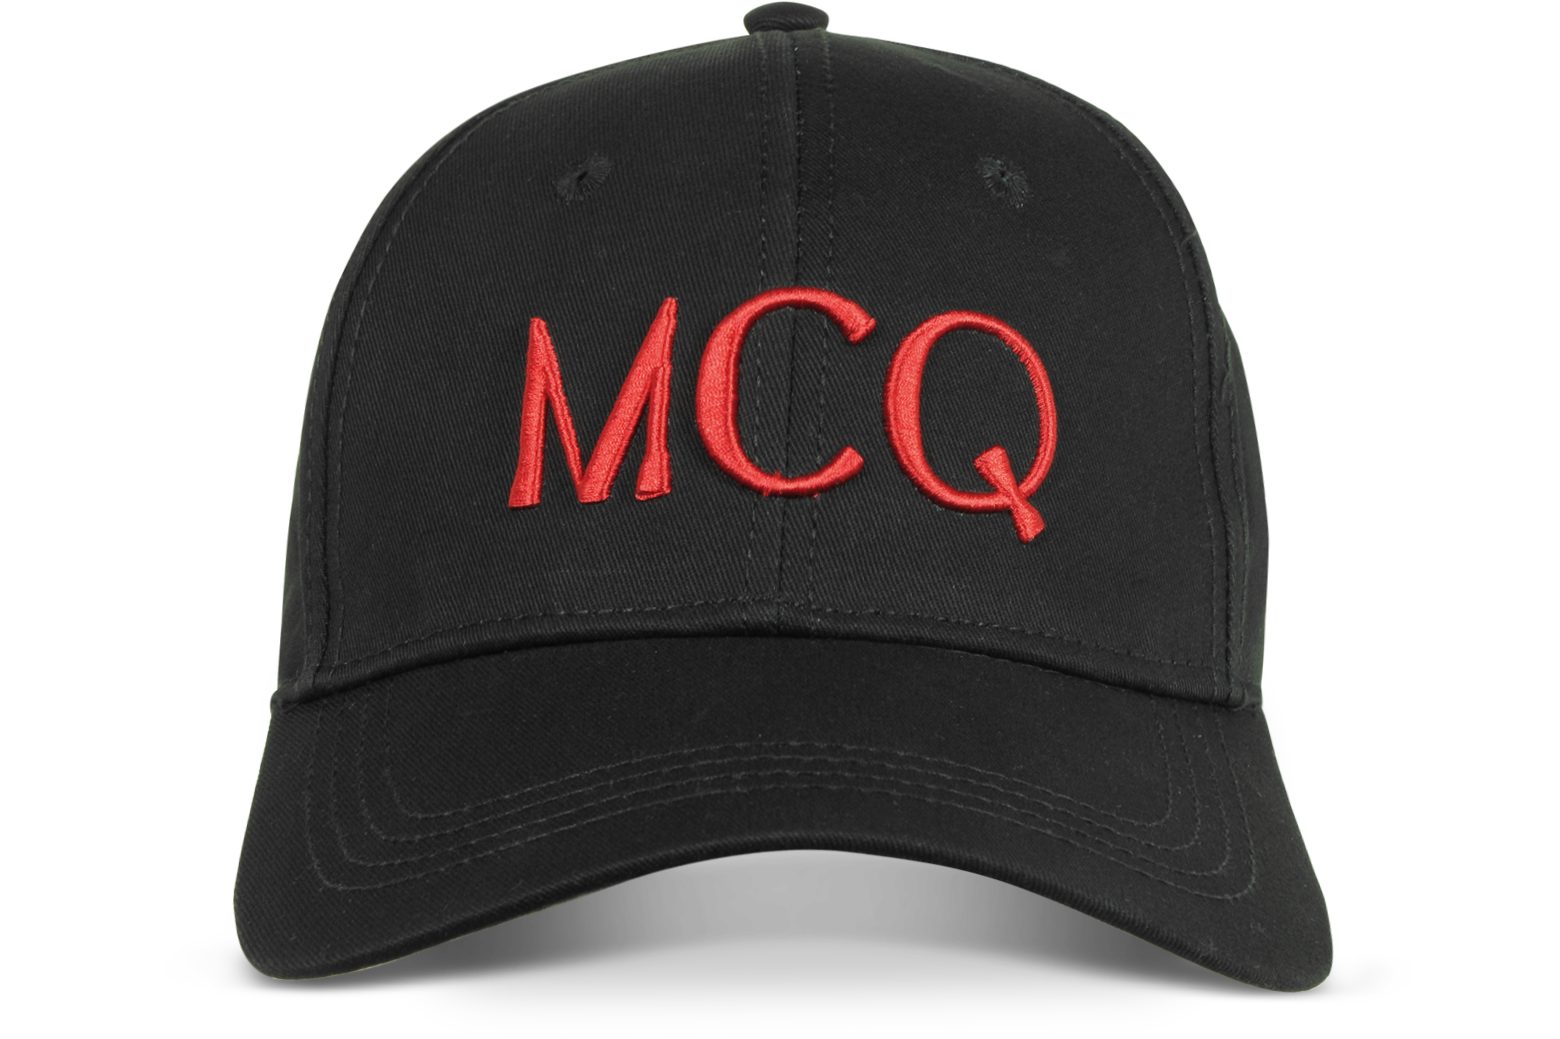 mcq hat